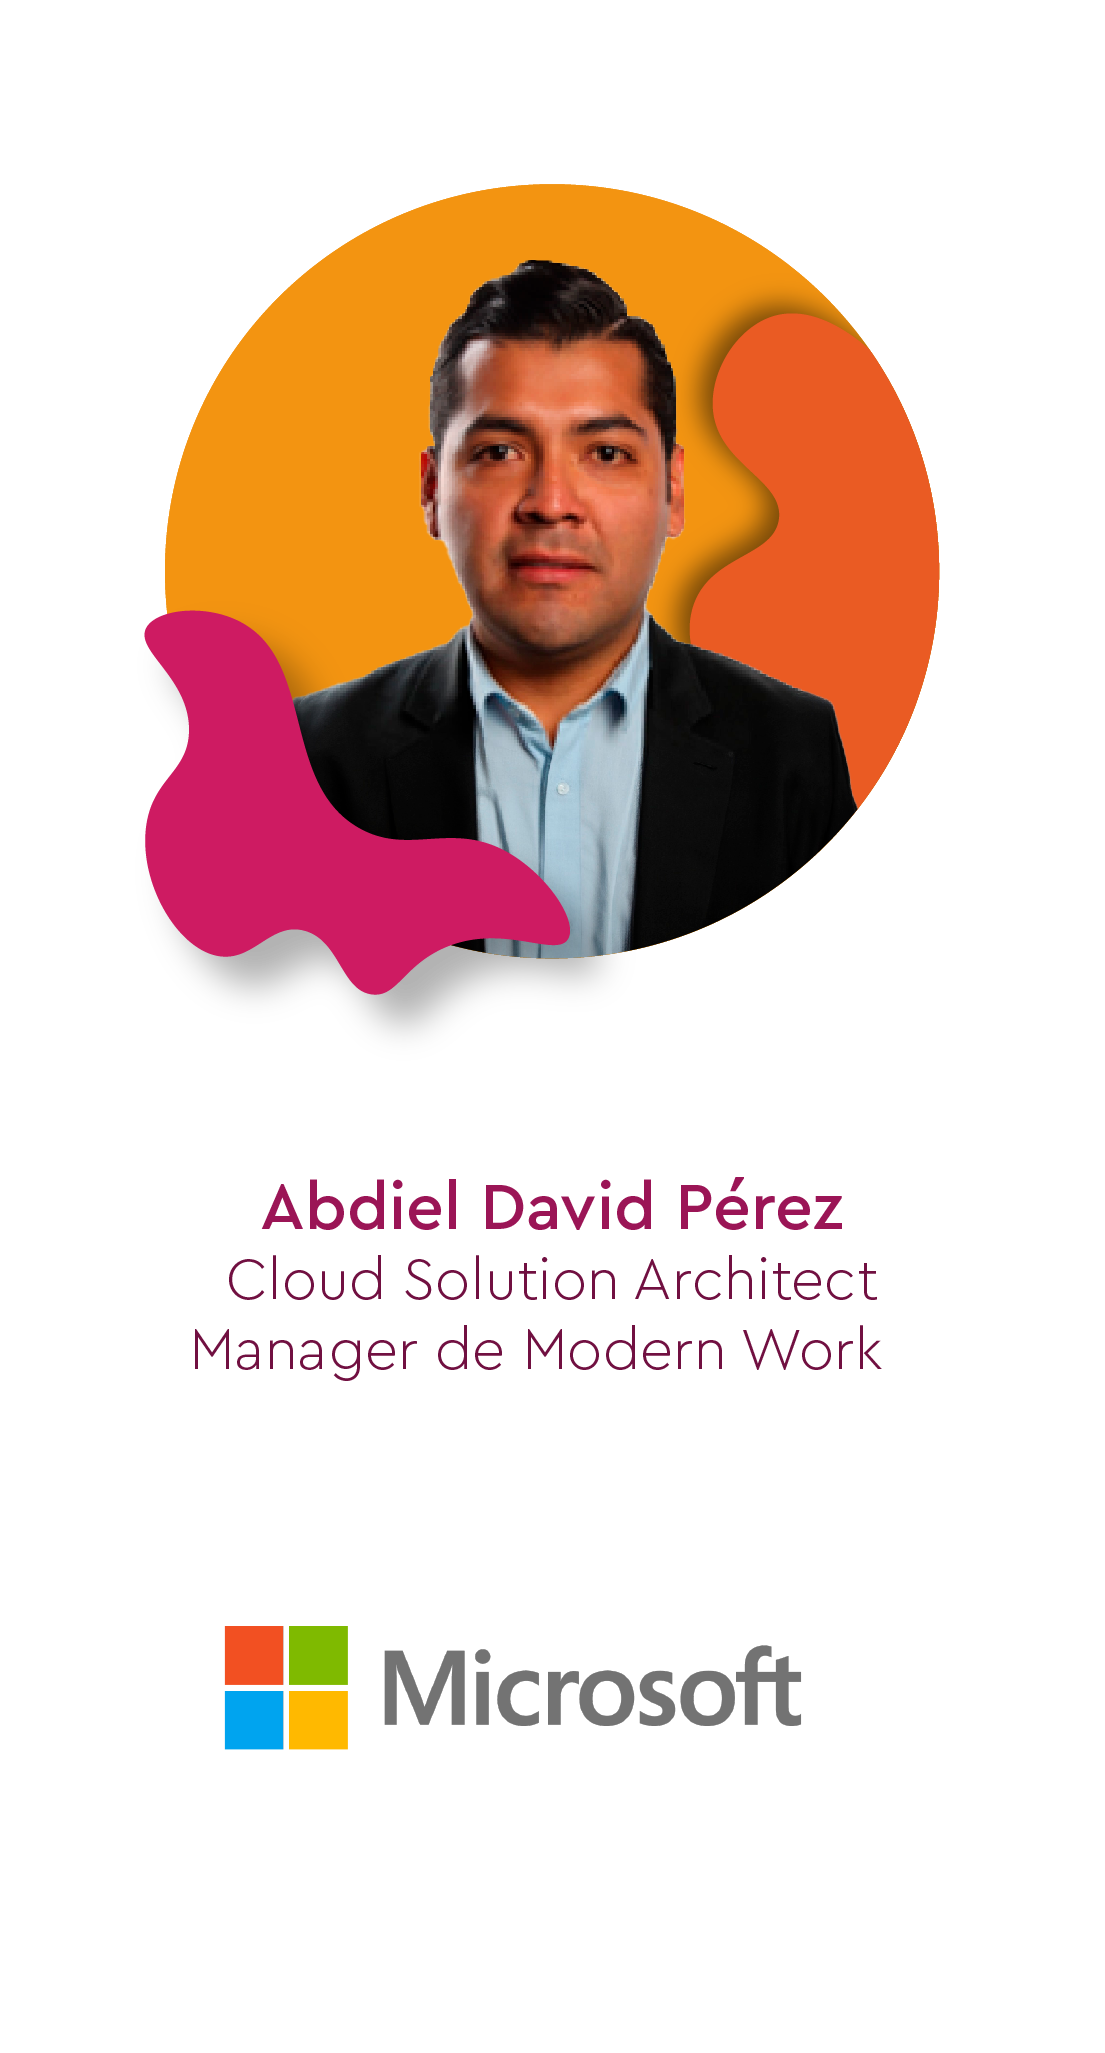 Abdiel David Pérez